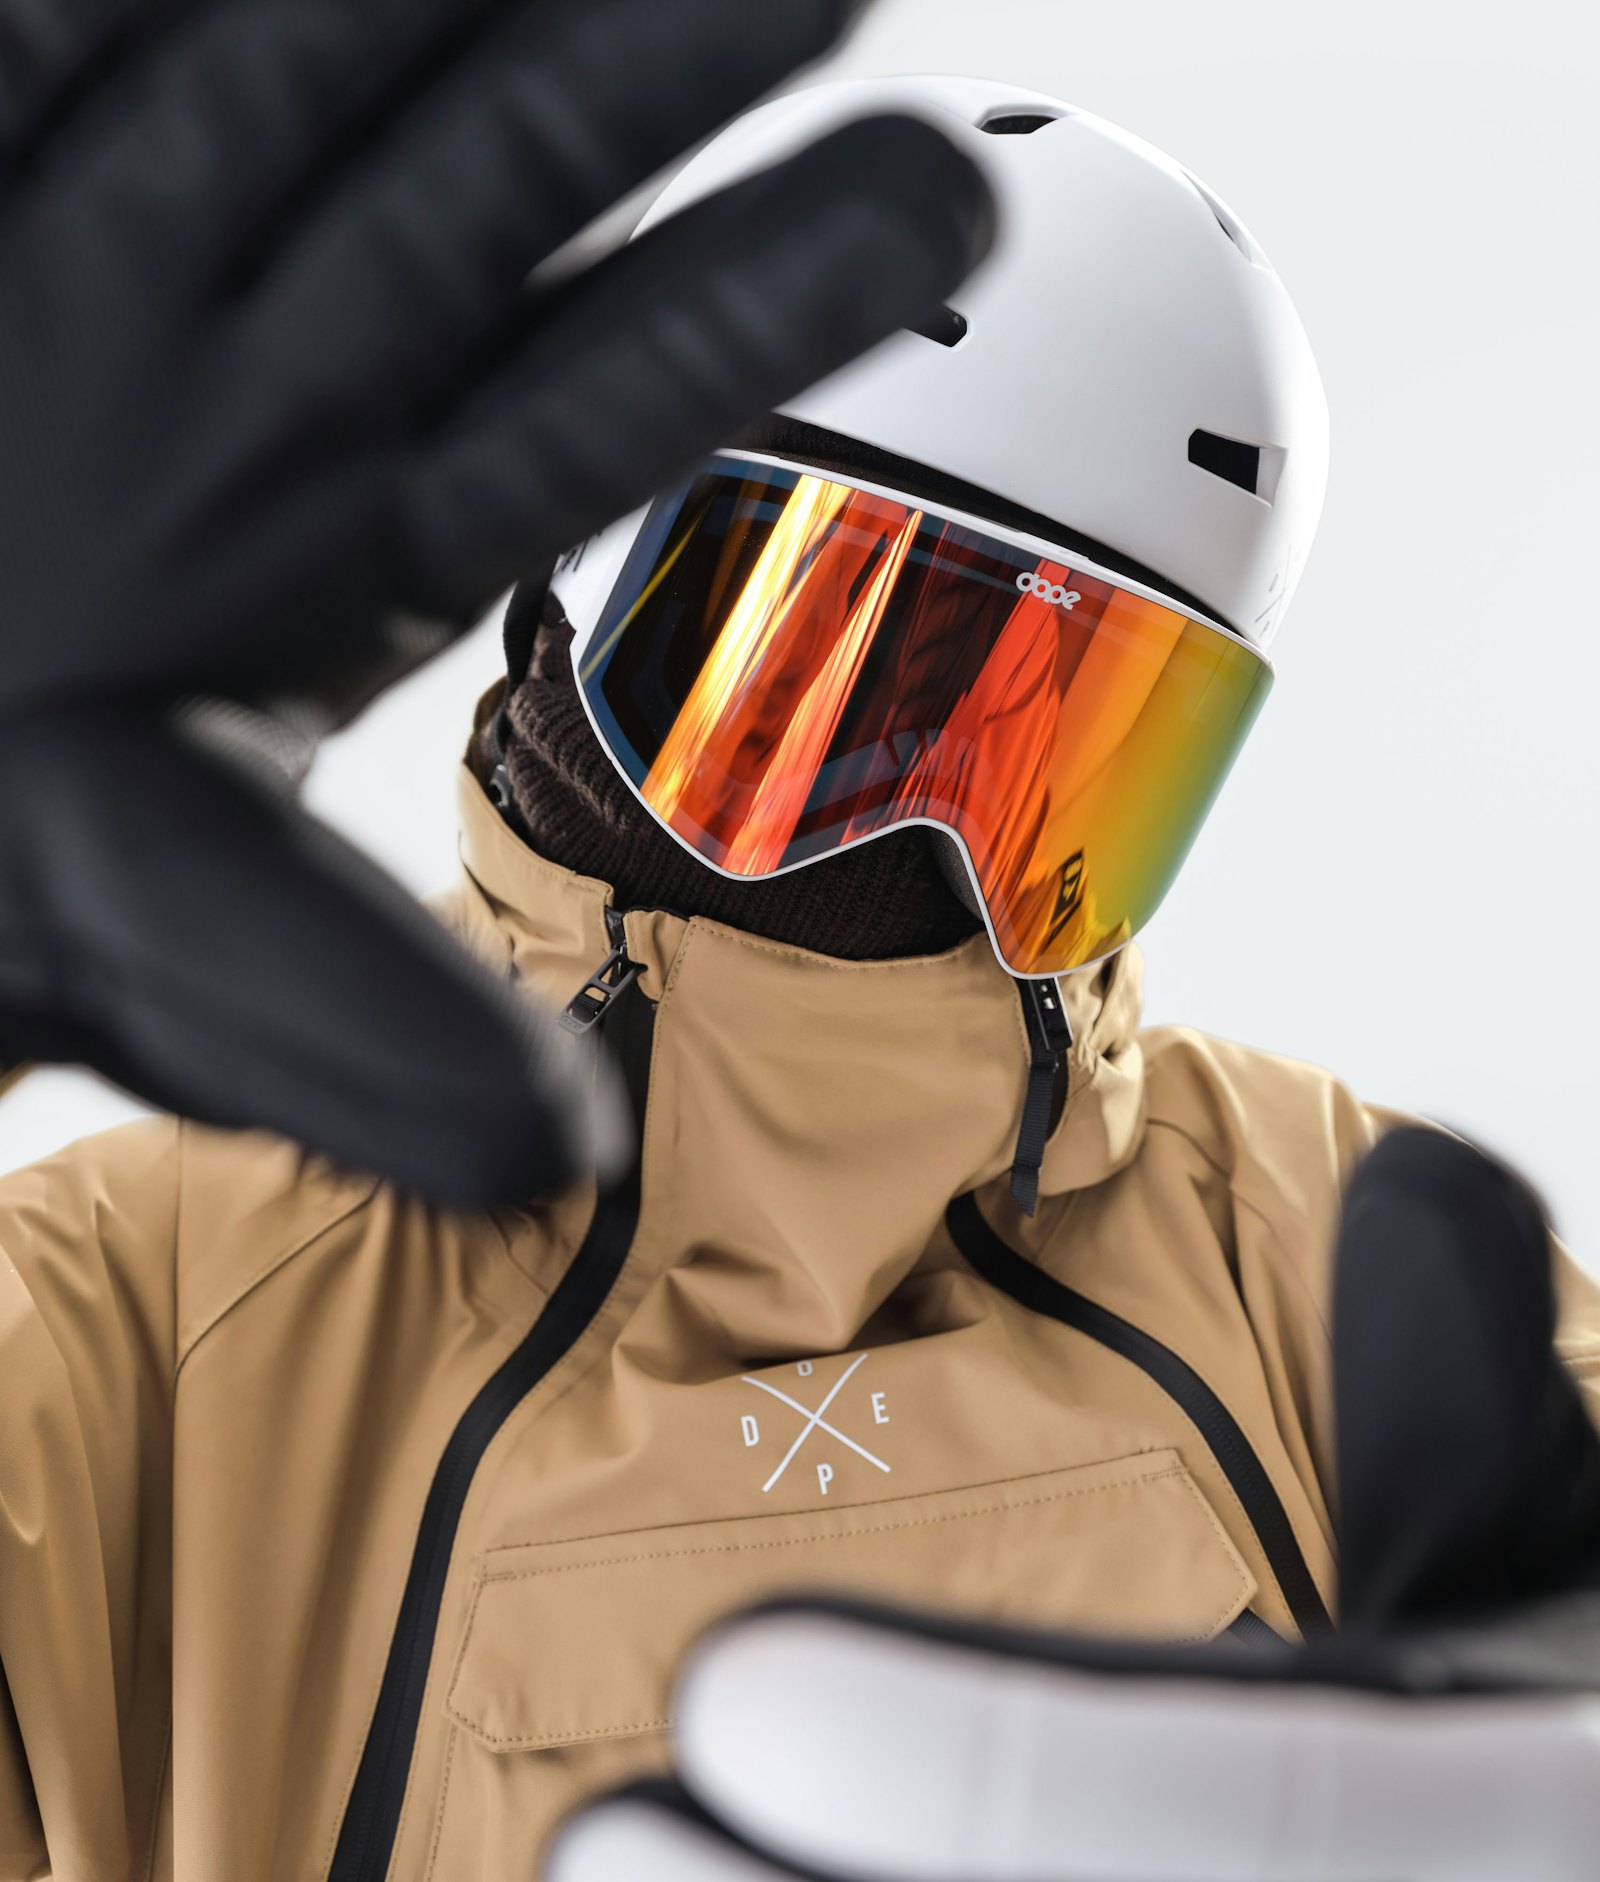 Akin 2020 Veste de Ski Homme Gold